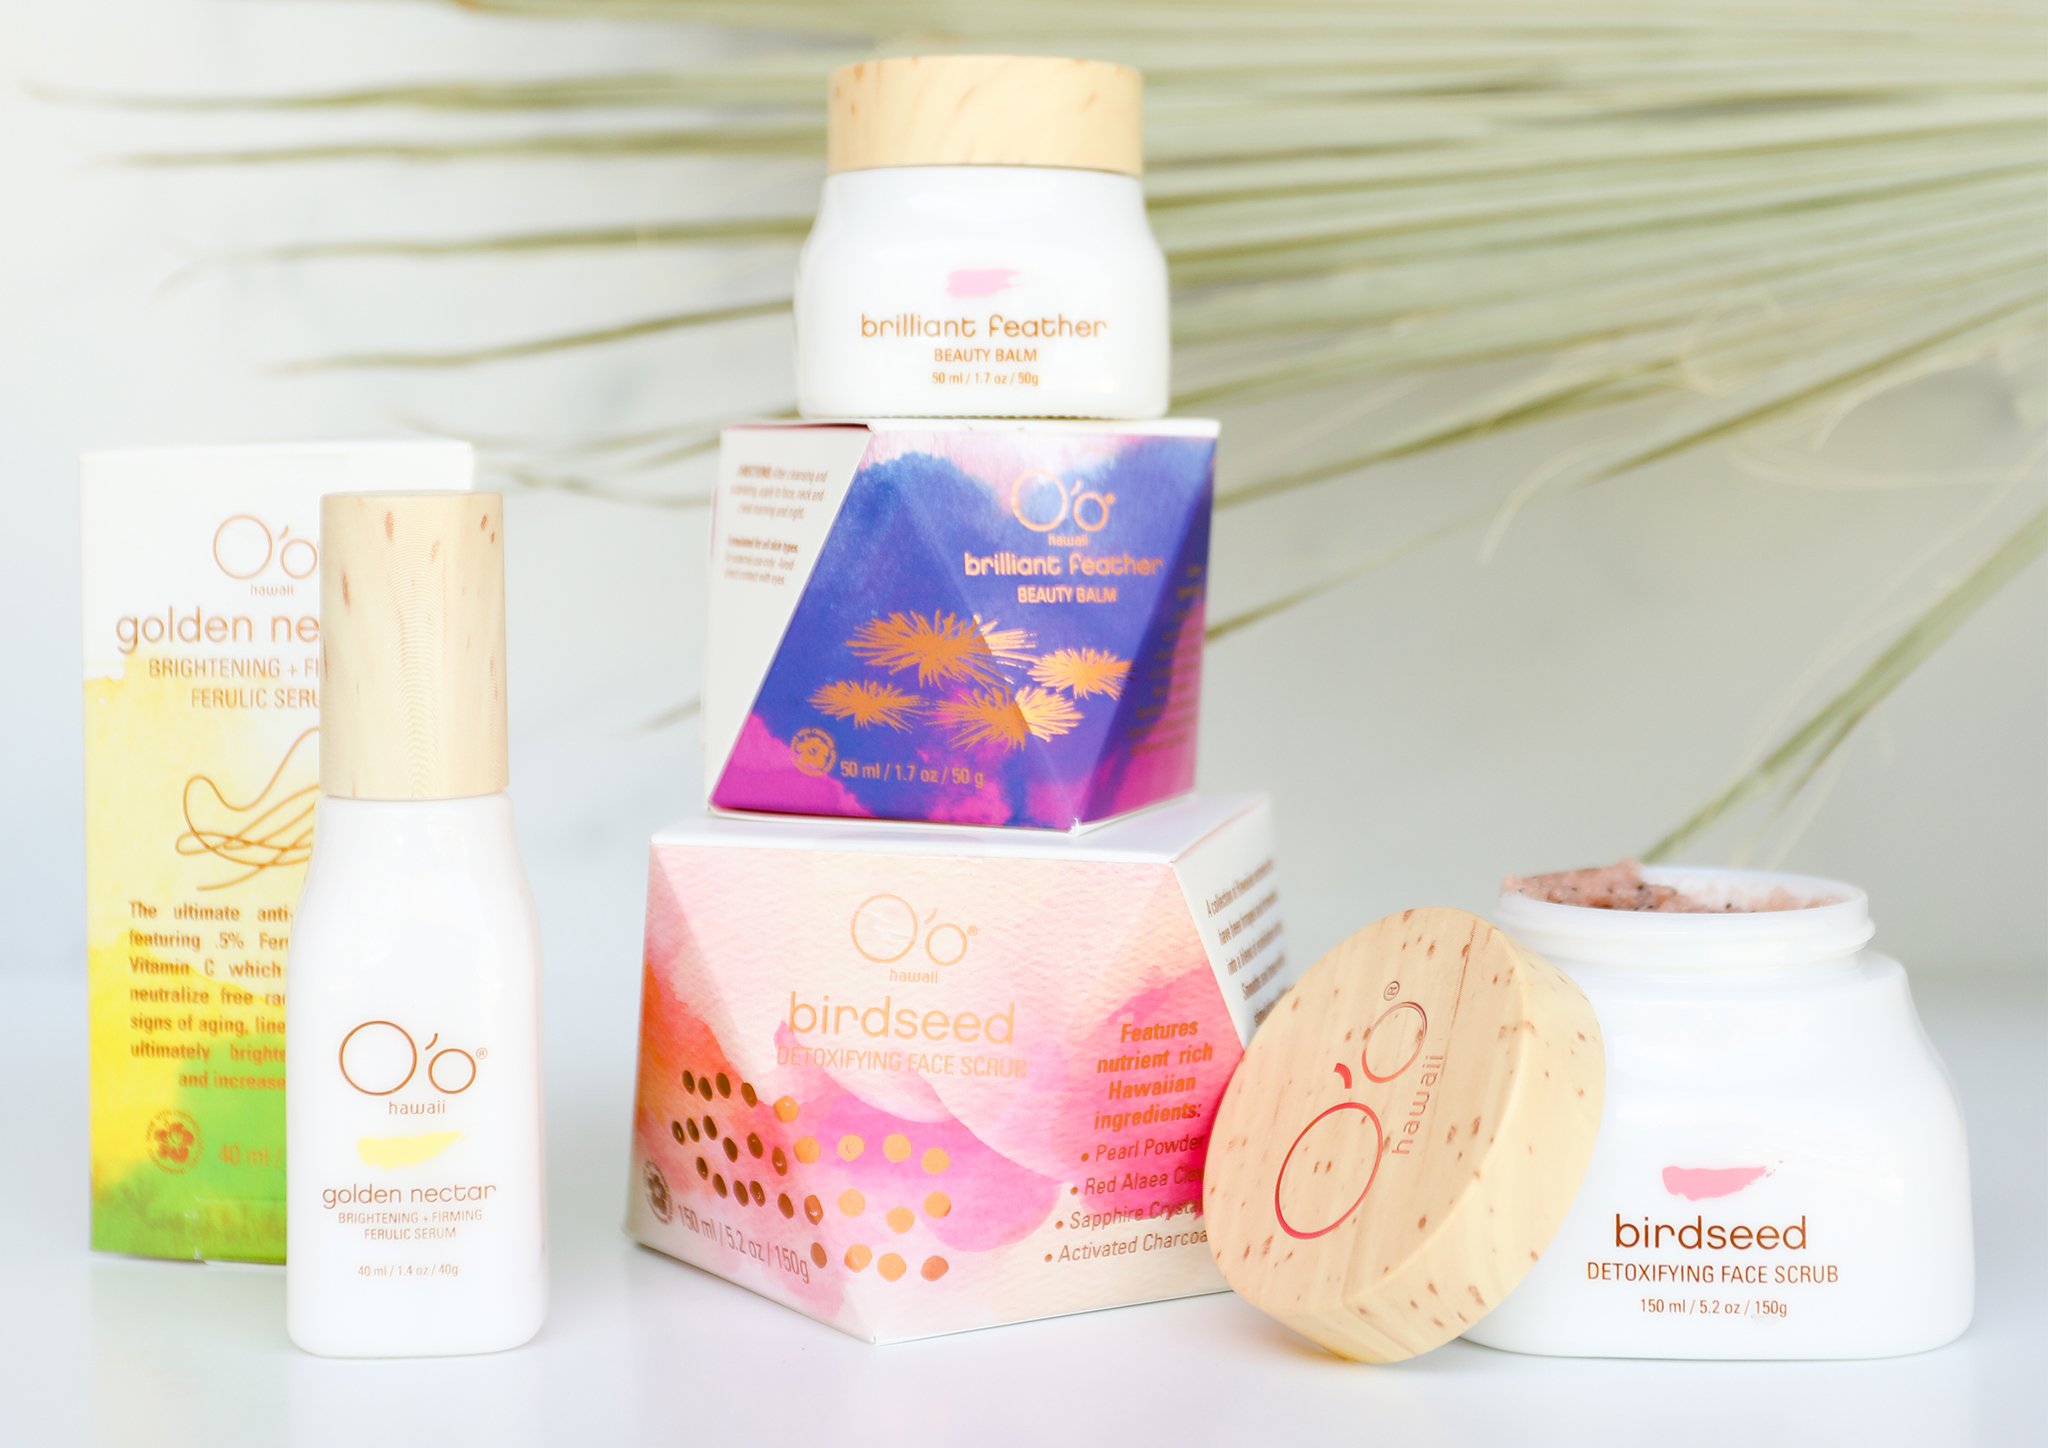 Image of assorted O'o Hawaii beauty and skincare products